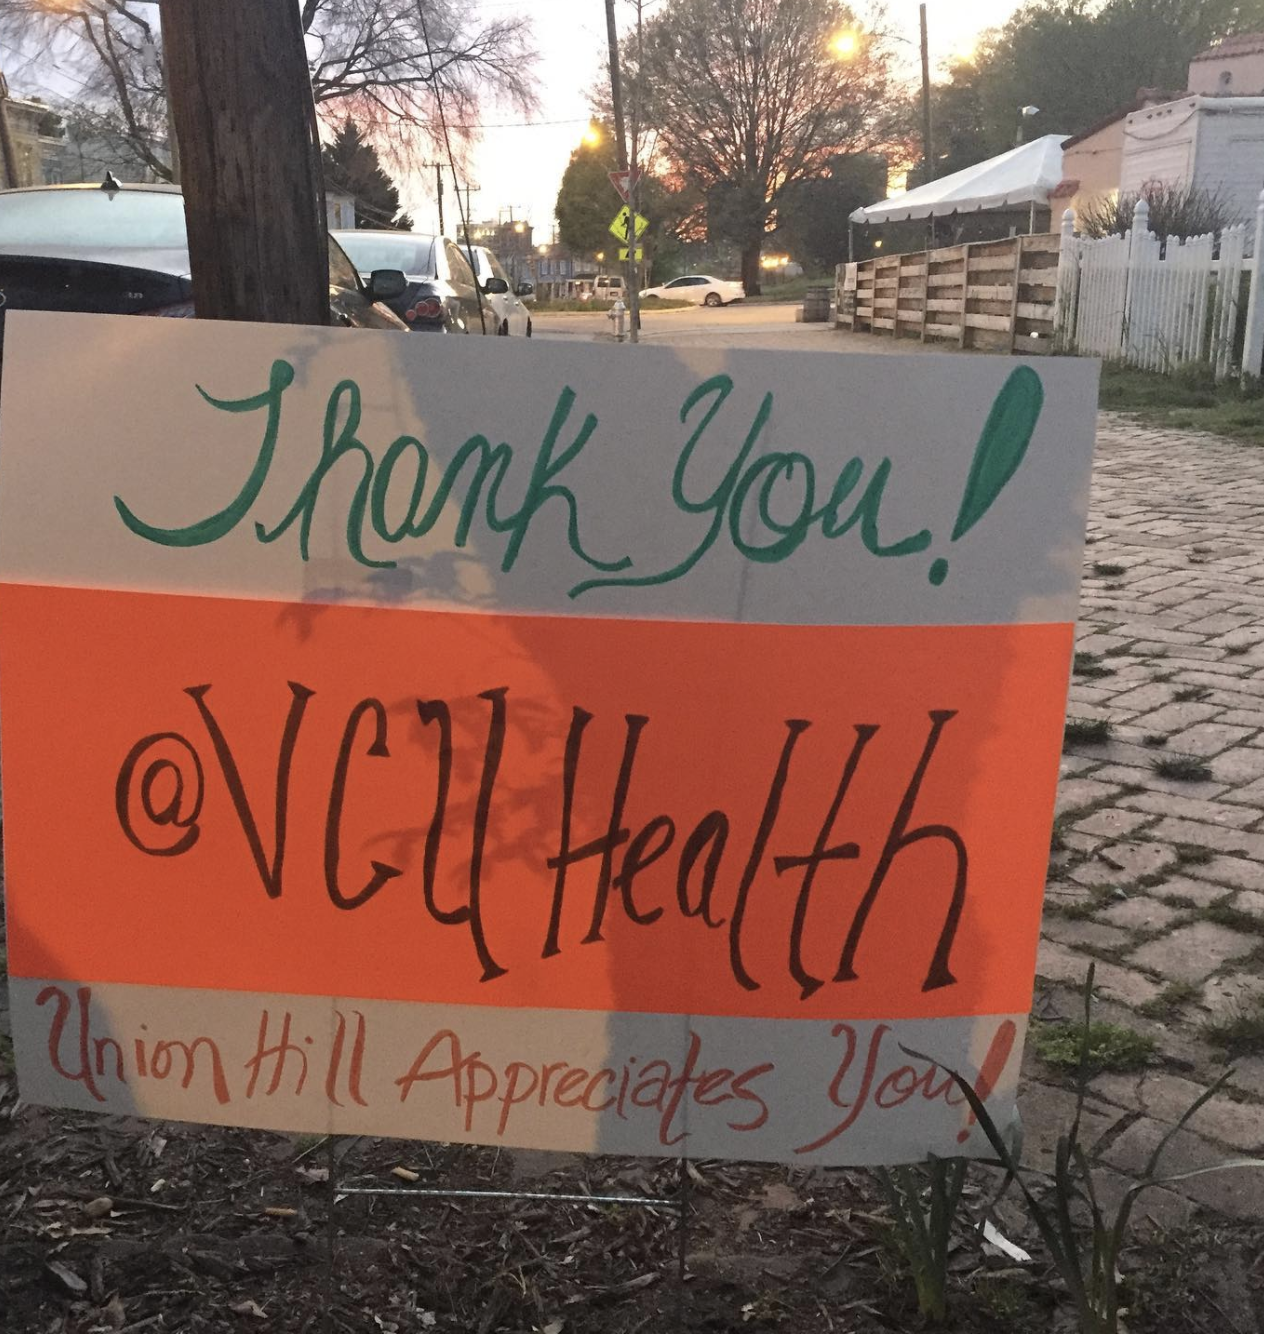 Thank you VCU Health! Union Hill appreciates you!